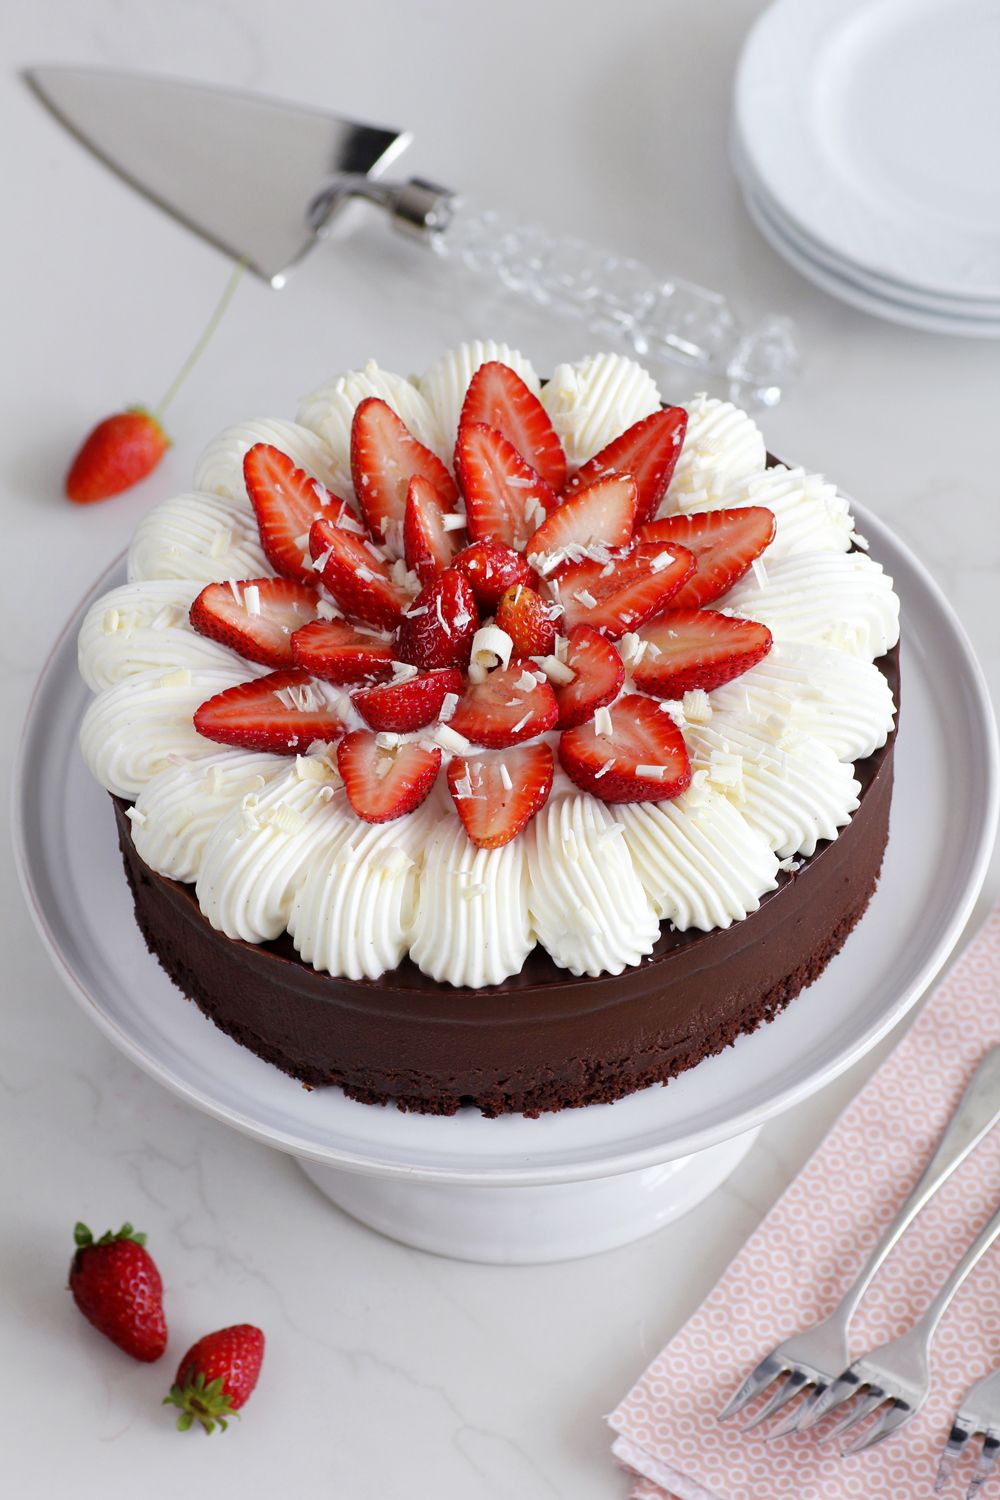 Vegan Chocolate Strawberry Cake - The Little Blog Of Vegan